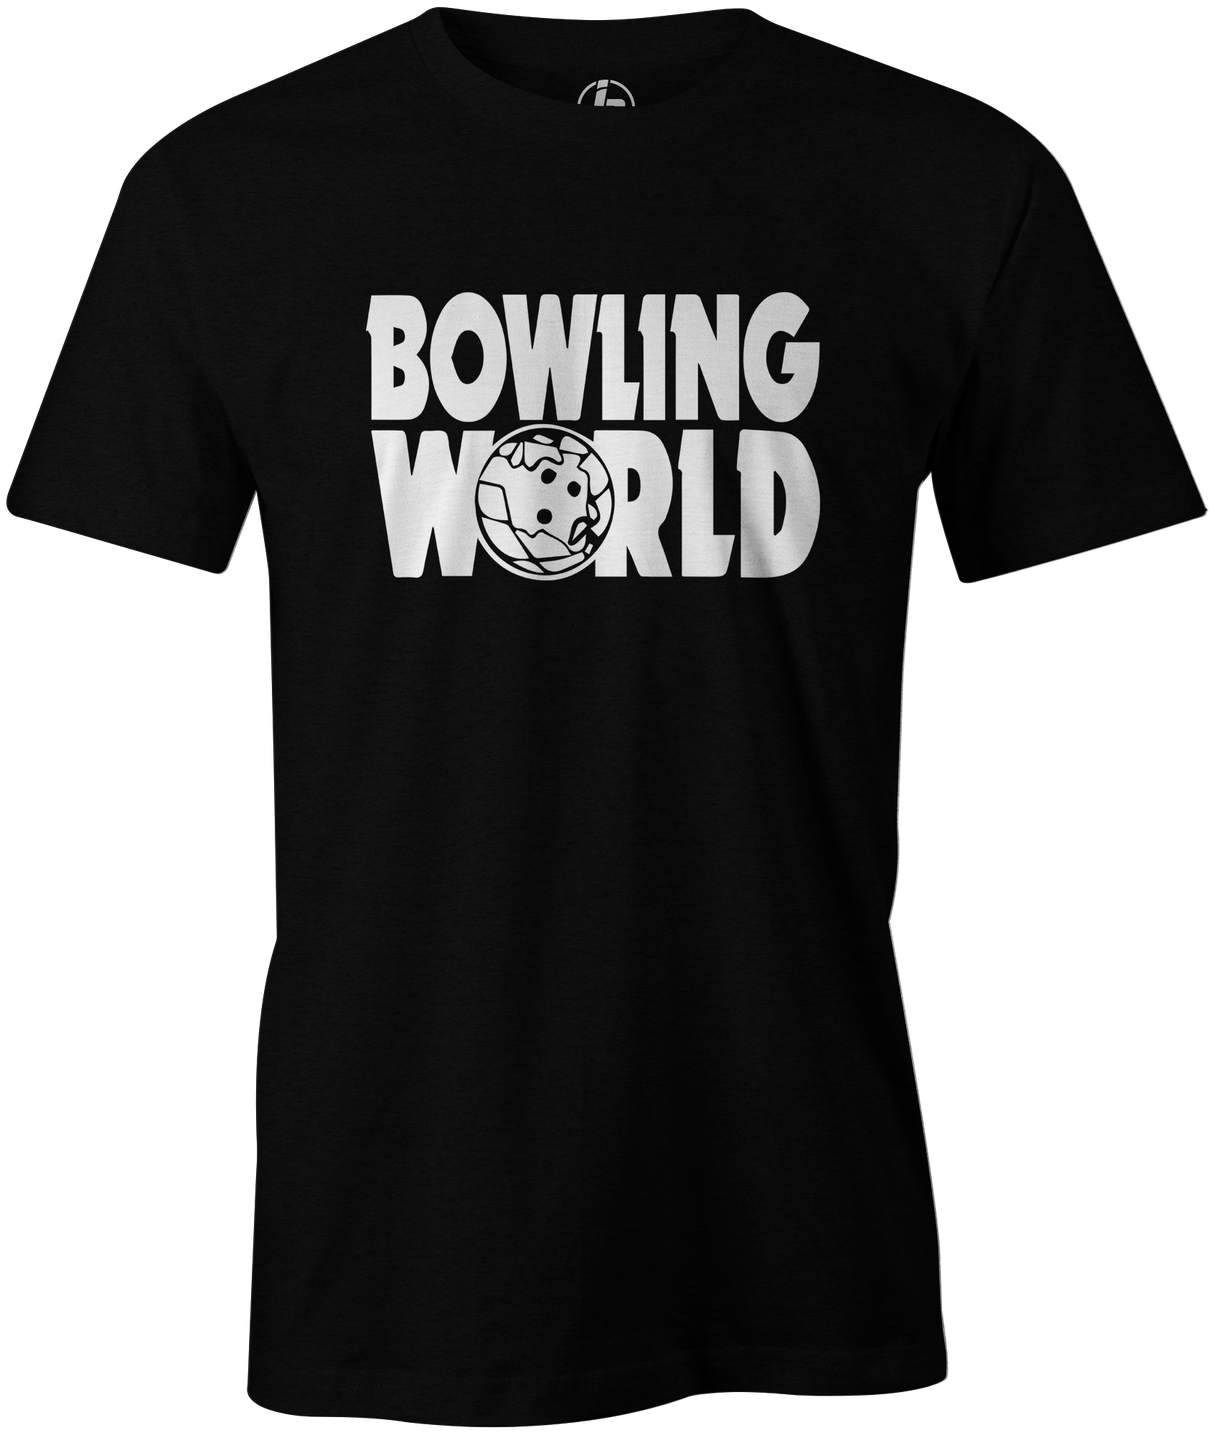 SALE - Bowling World | Black Large